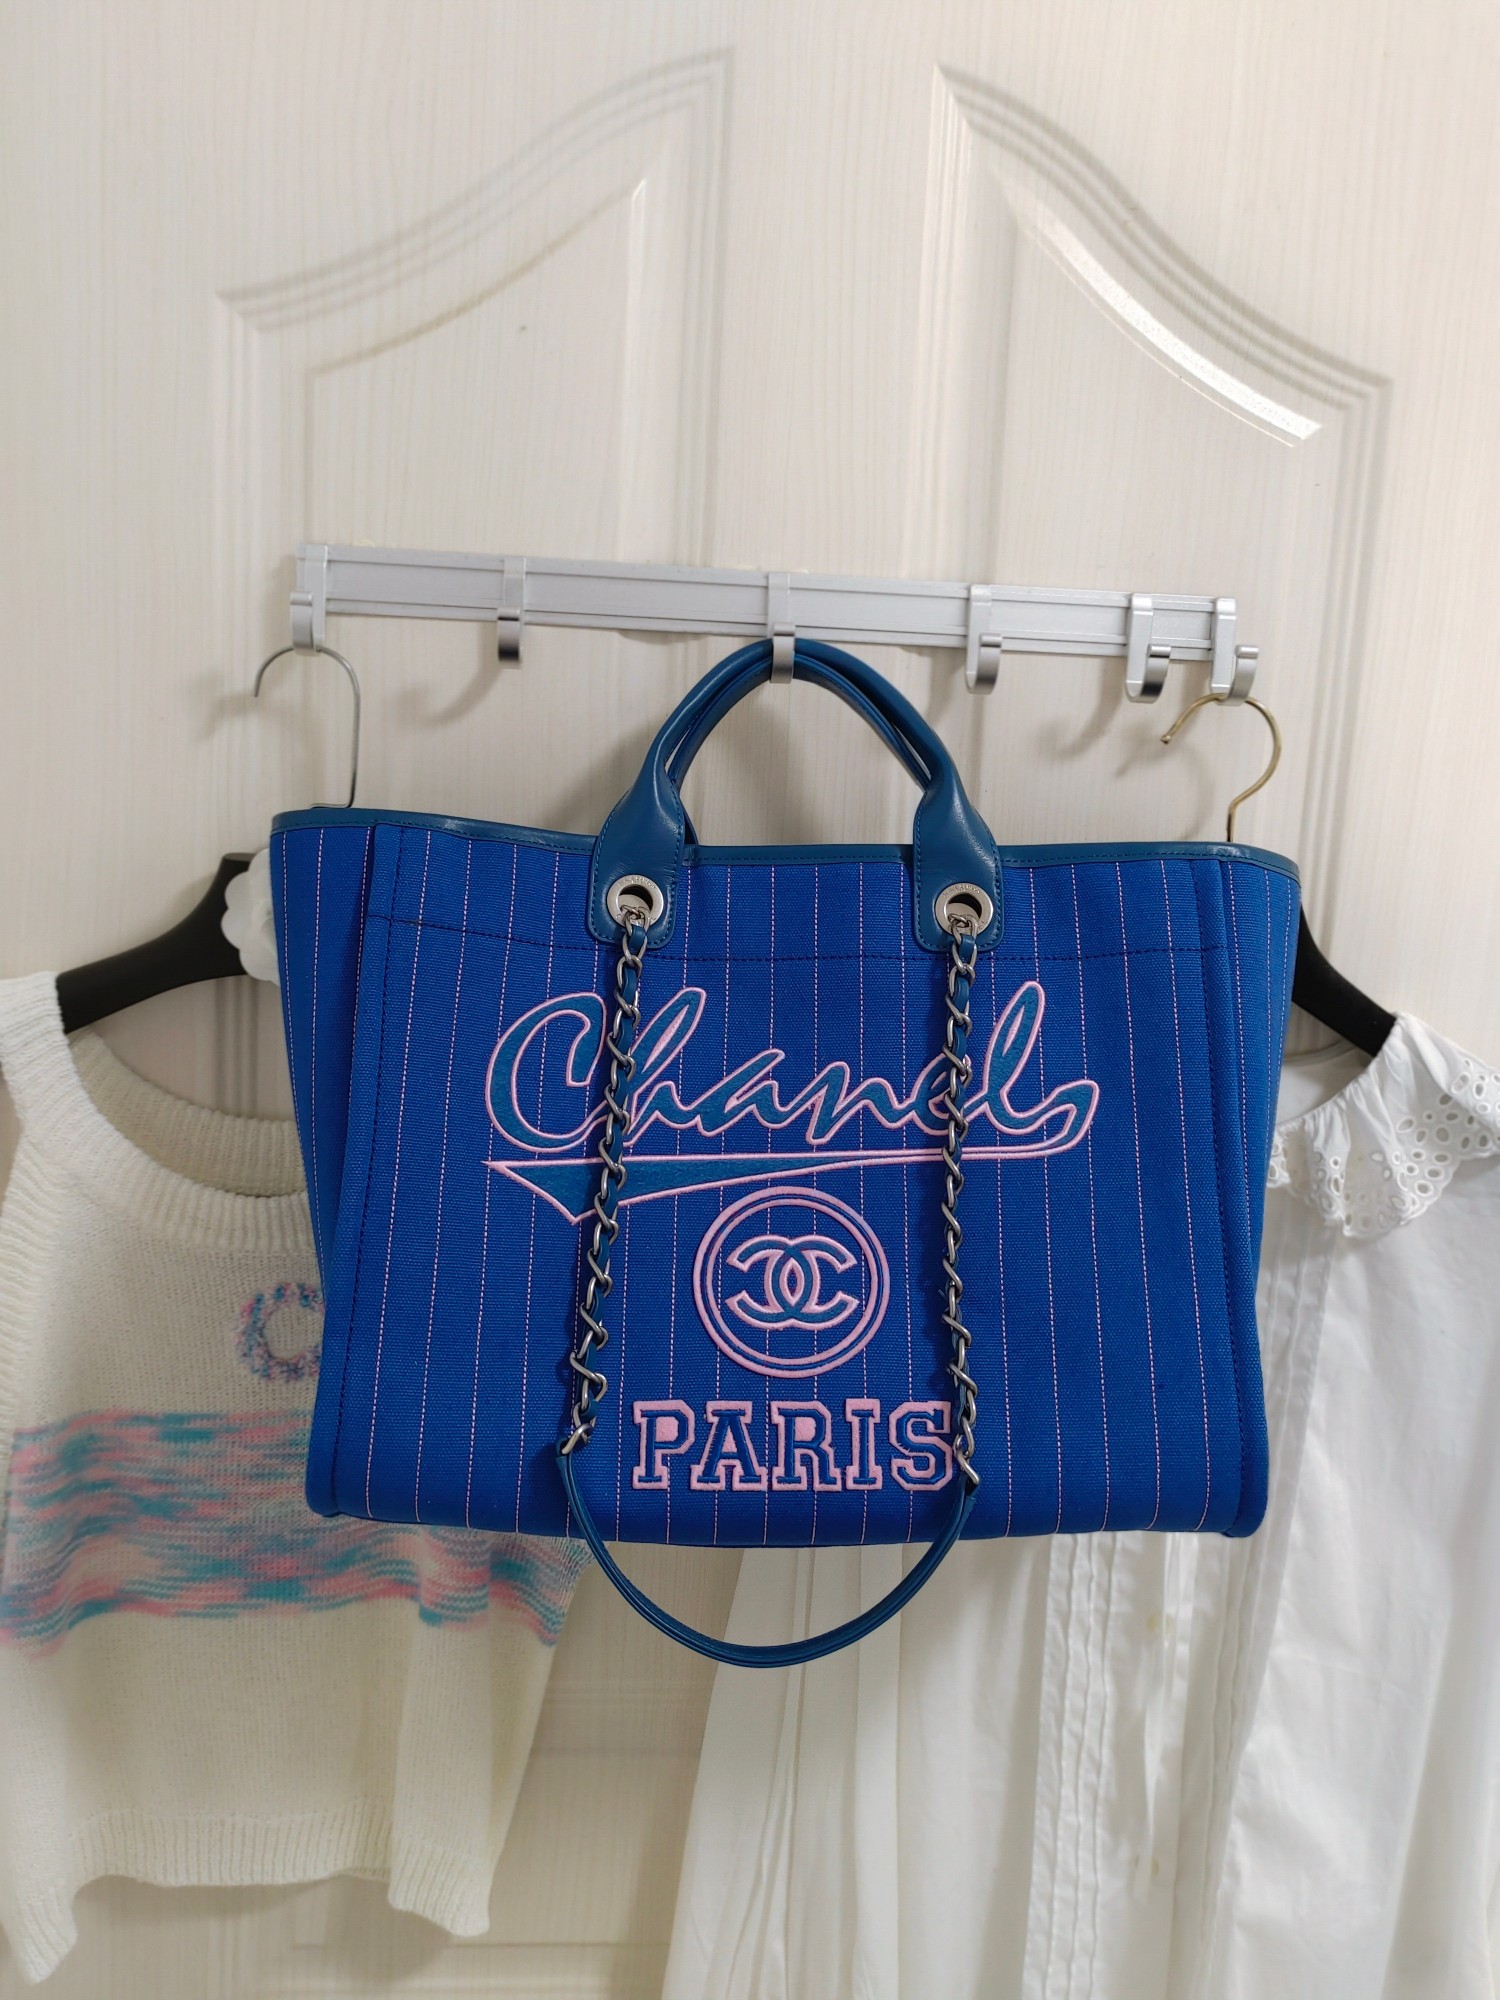 Chane*l 23p 最新款️ 条纹蓝 沙滩包 大号出货 38cm质感很不错 帆布材质 配牛皮 特别酷帅style! ️